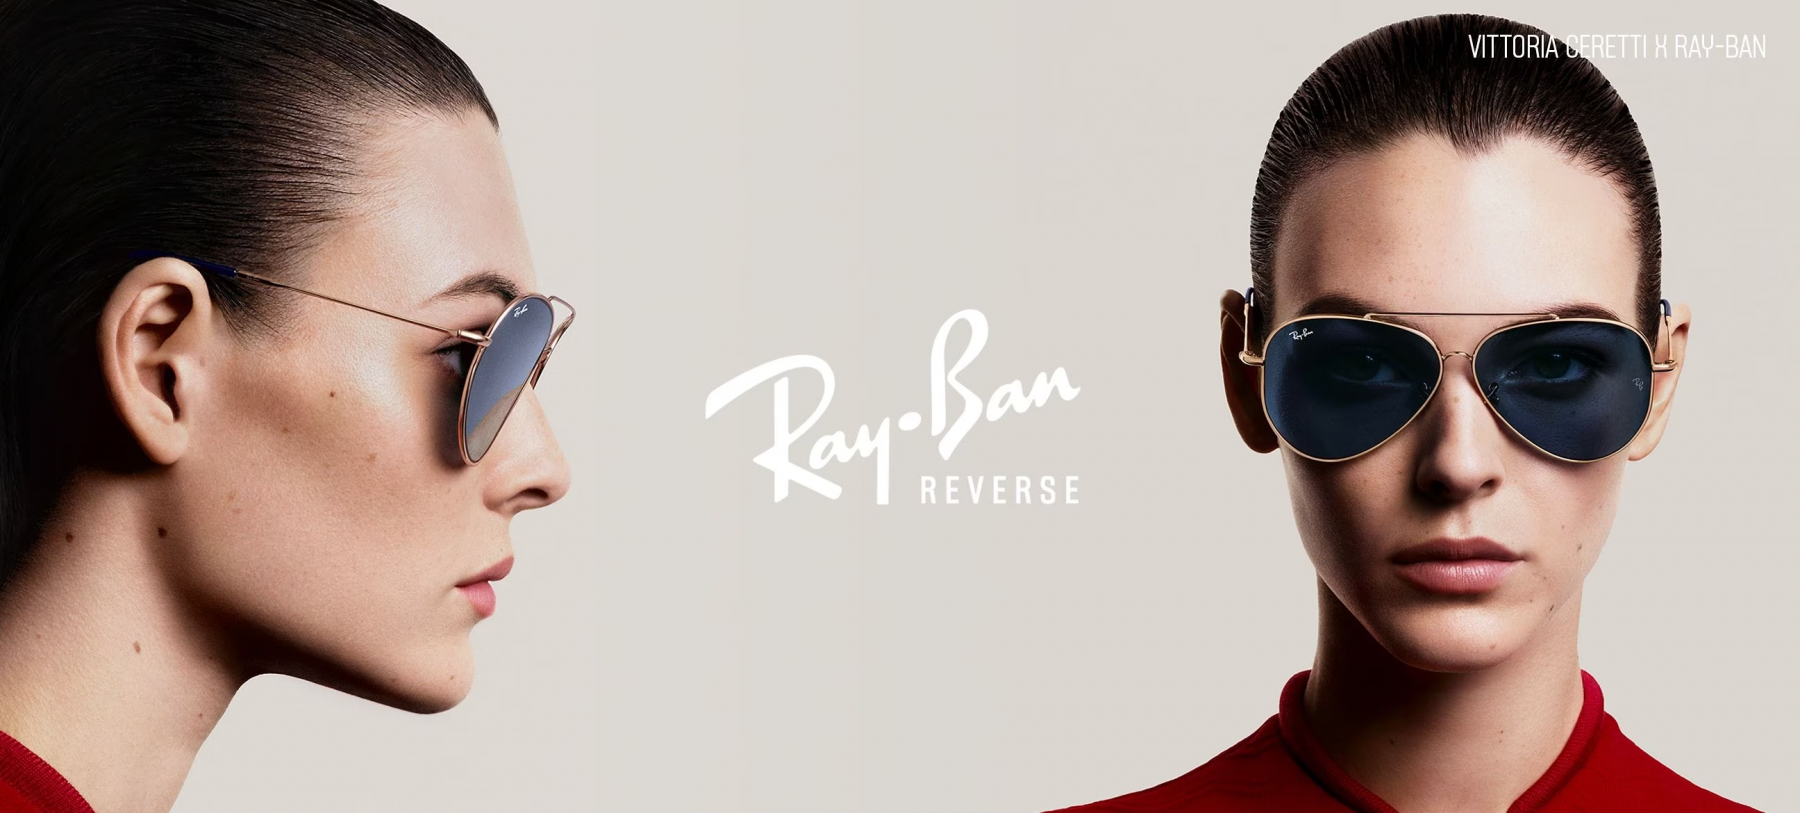 Ray Ban Aviator Reverse 101 92023A Tam 59 - Óculos de Sol